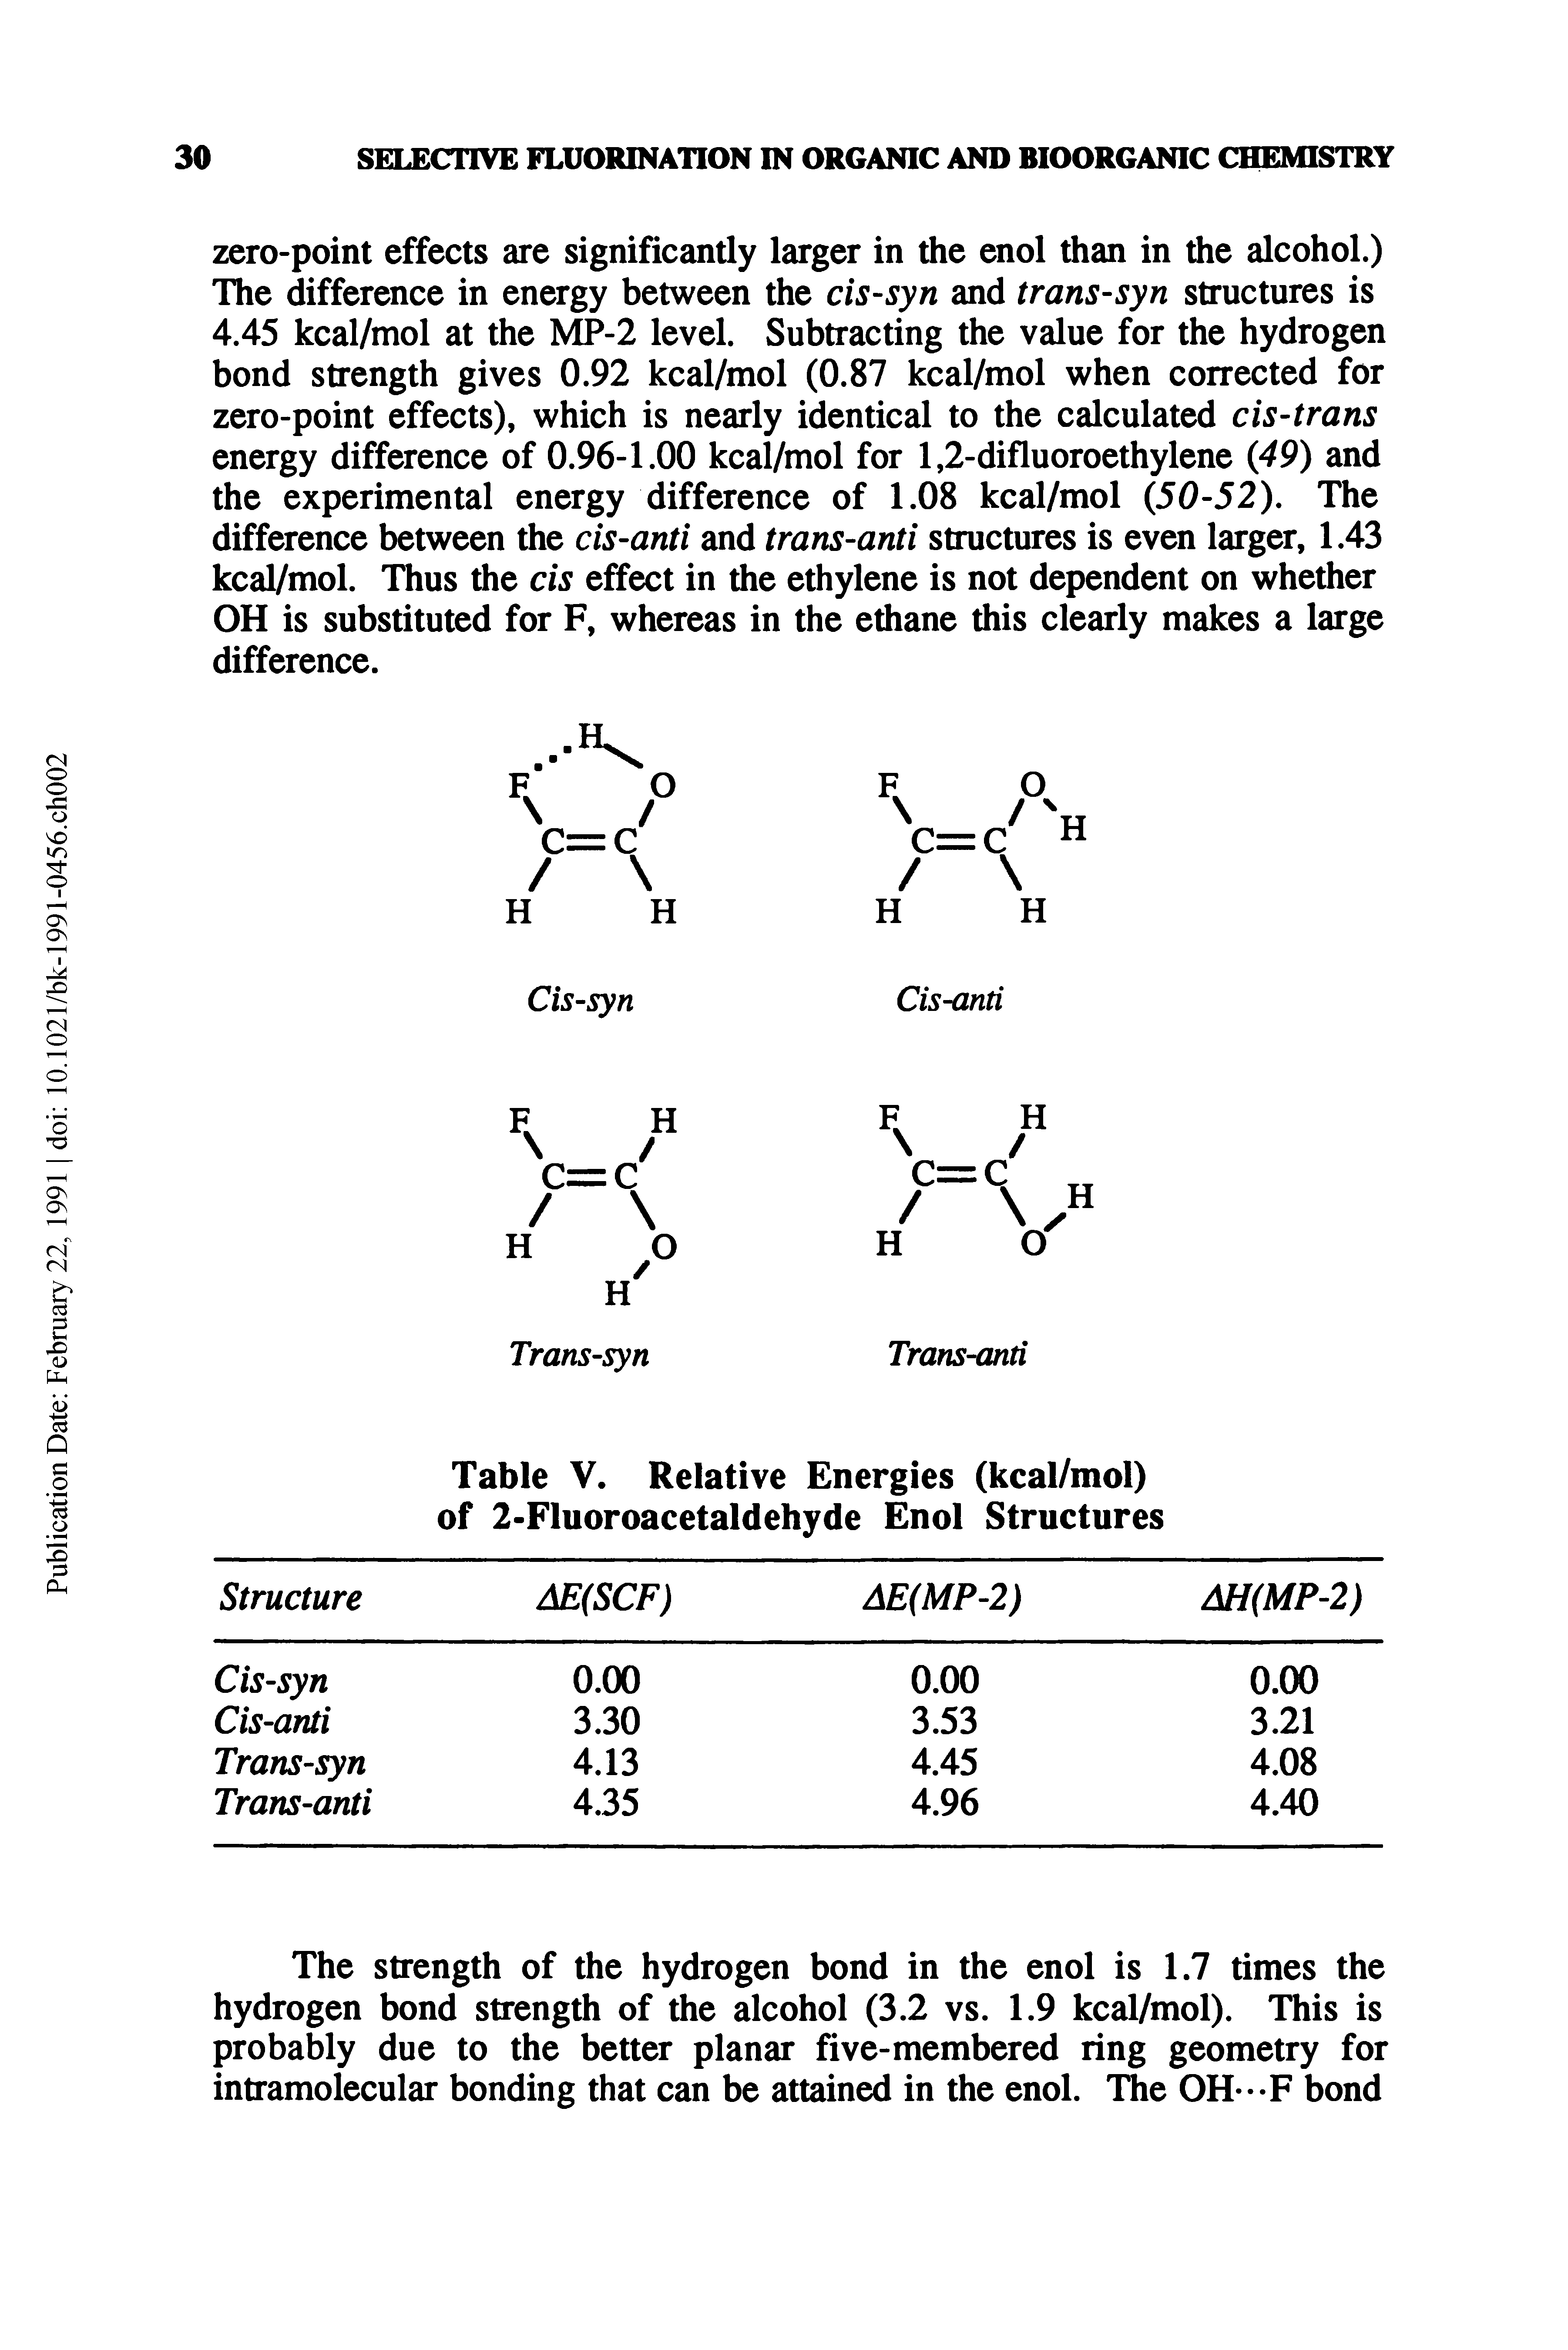 Table V. Relative Energies (kcal/mol) of 2-Fluoroacetaldehyde Enol Structures...